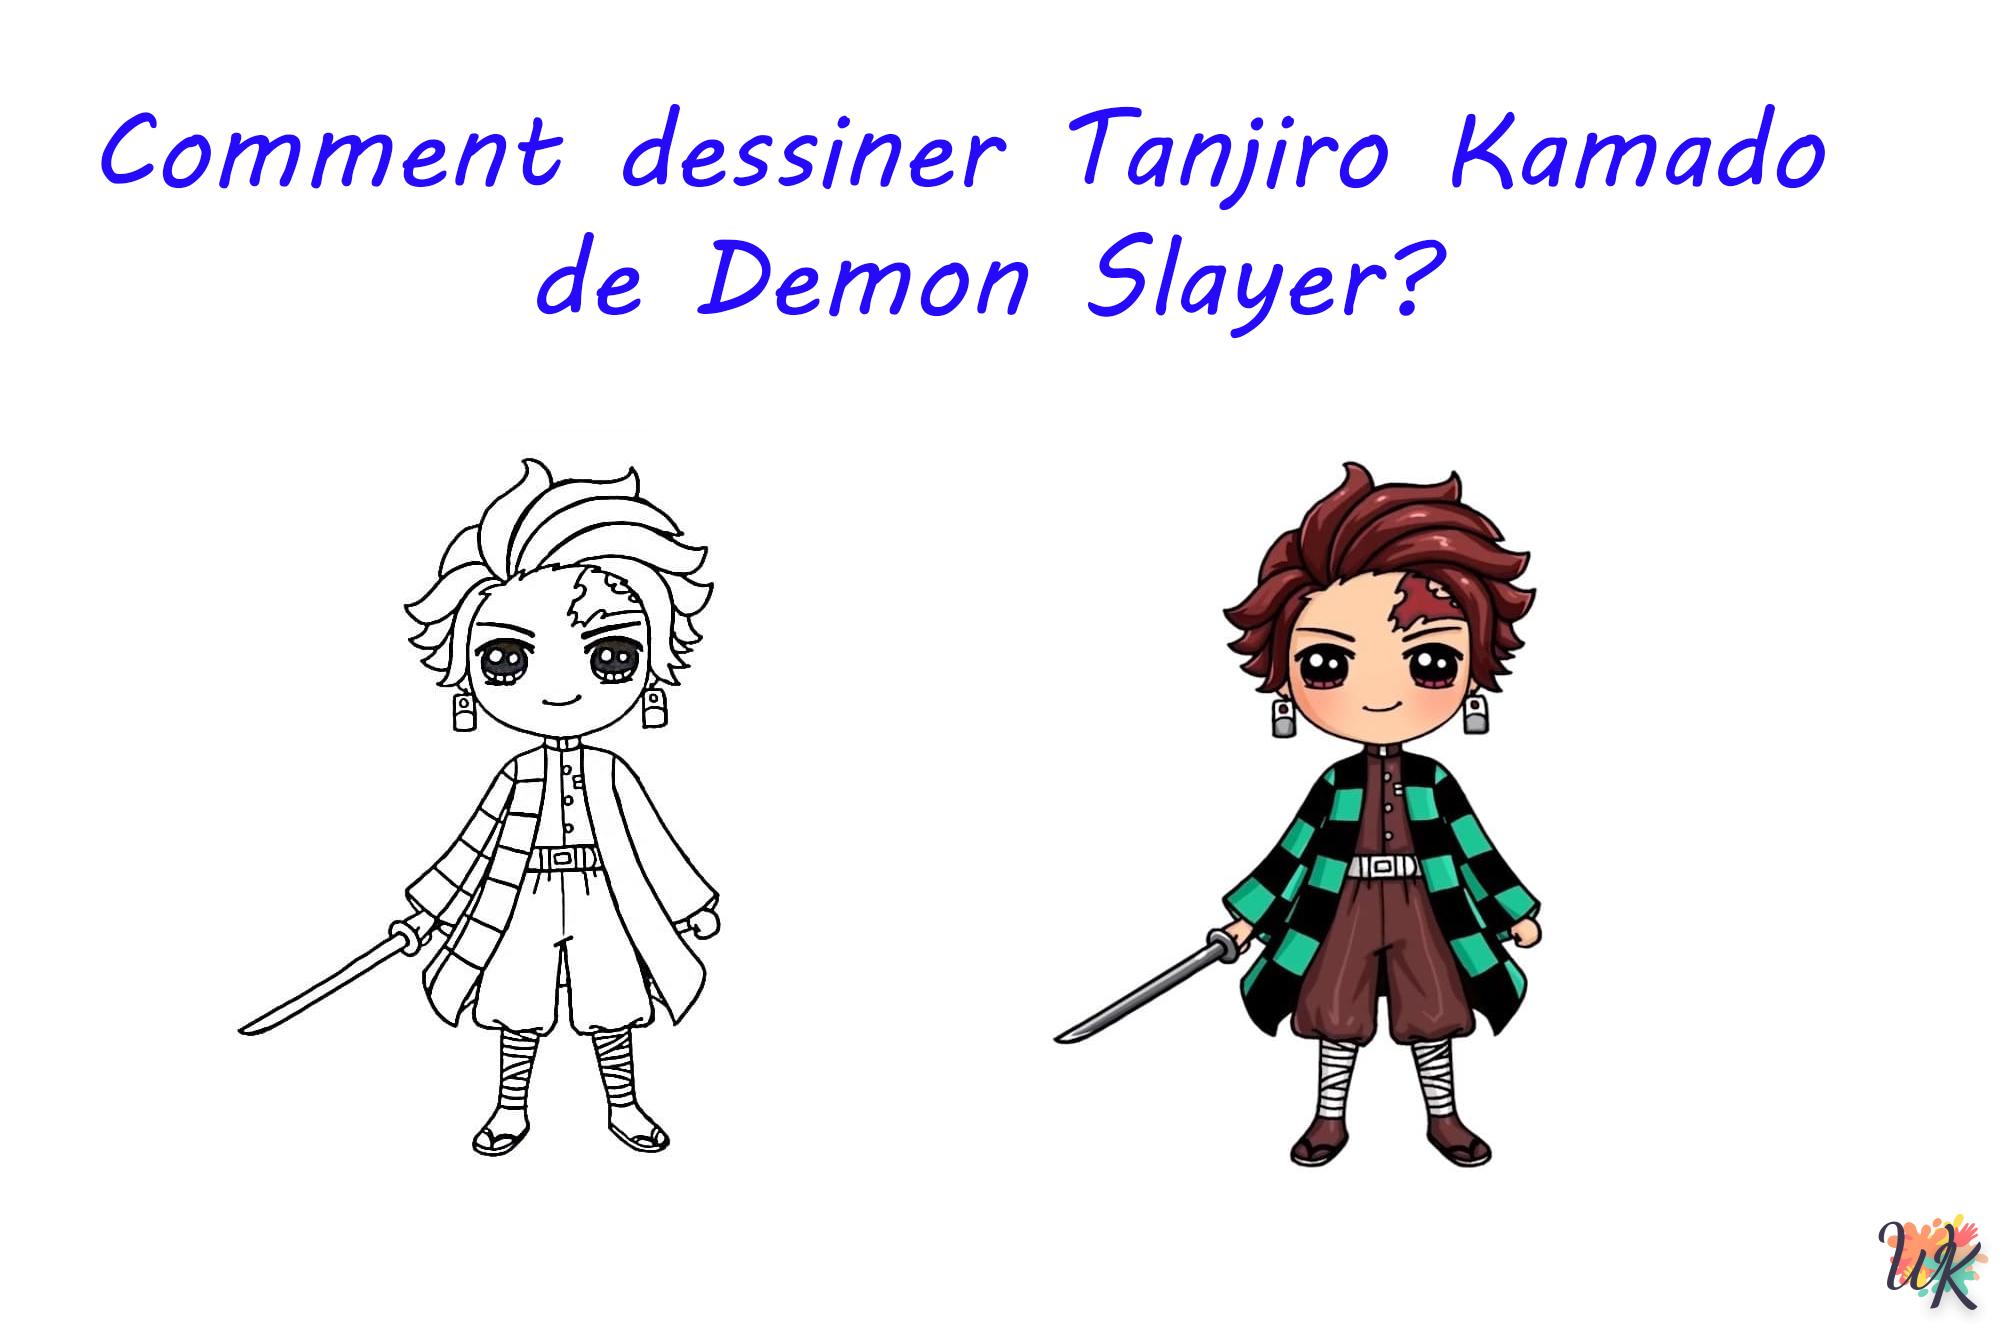 Comment dessiner Tanjiro Kamado de Demon Slayer?